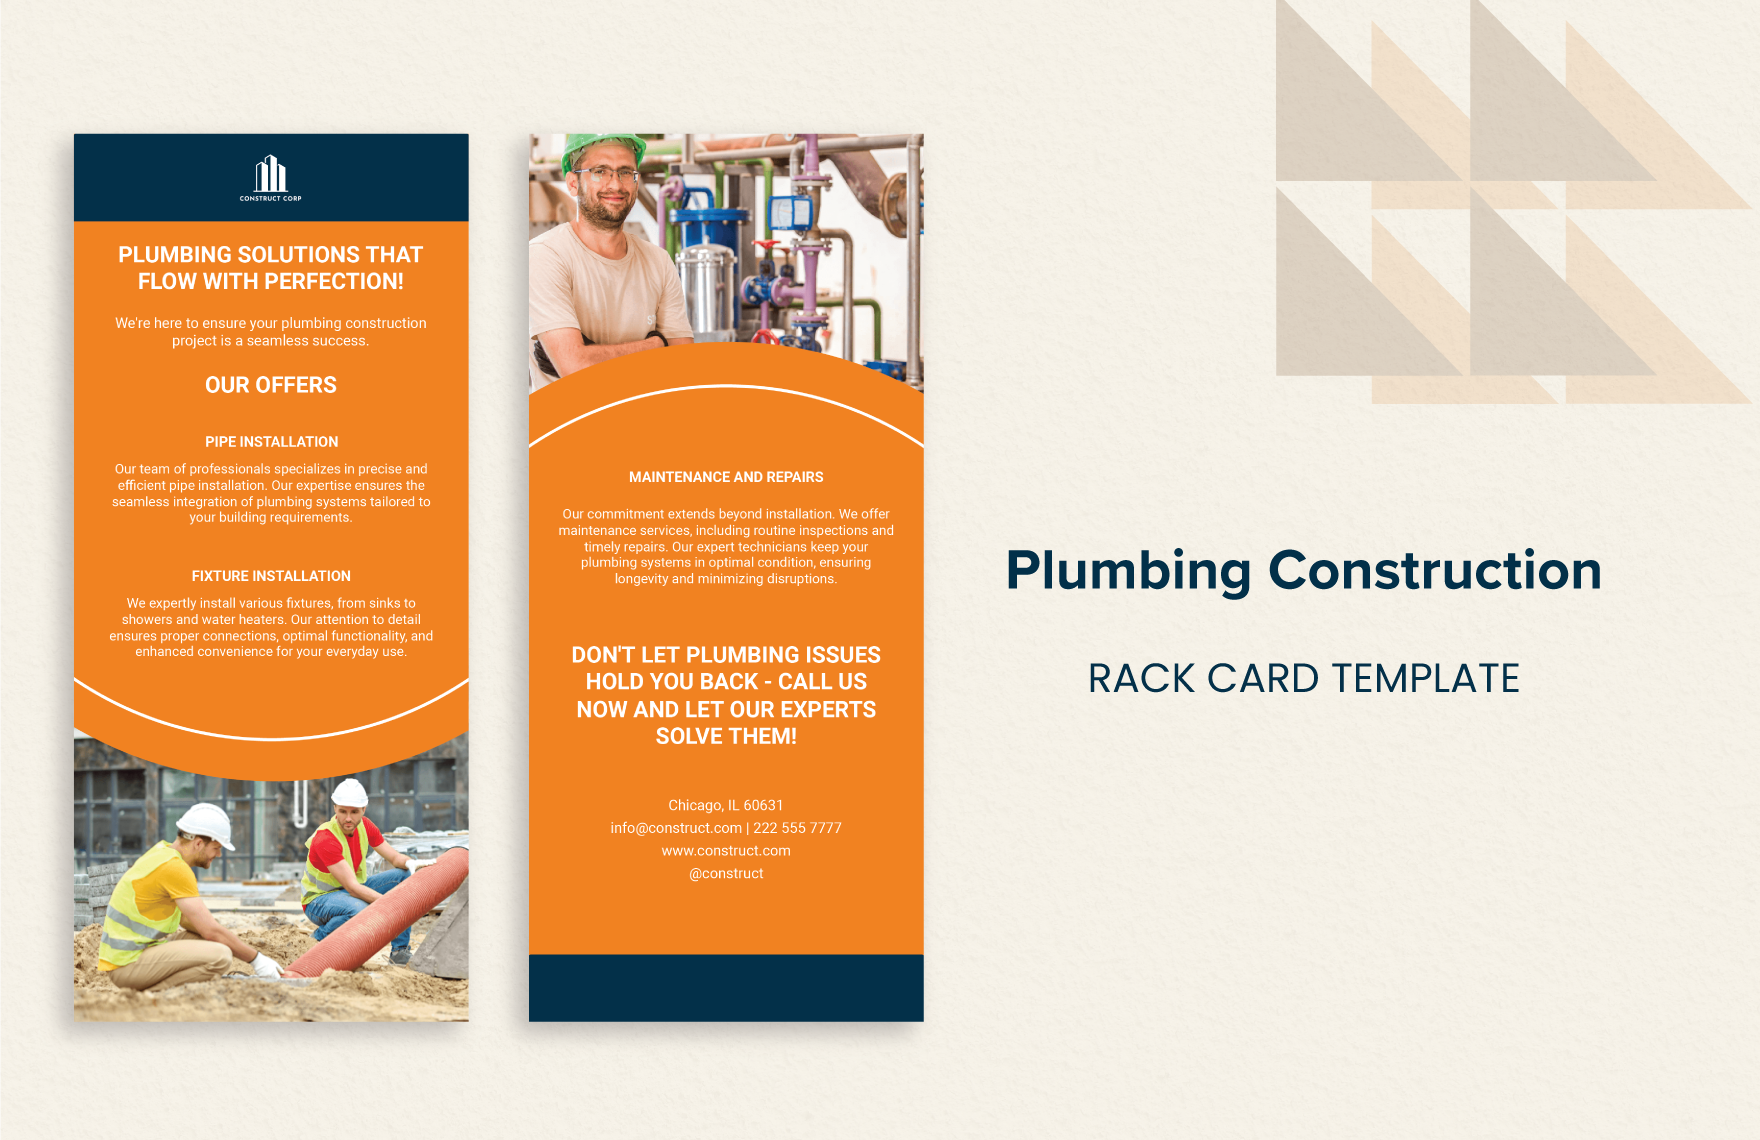 Plumbing Construction Rack Card Template